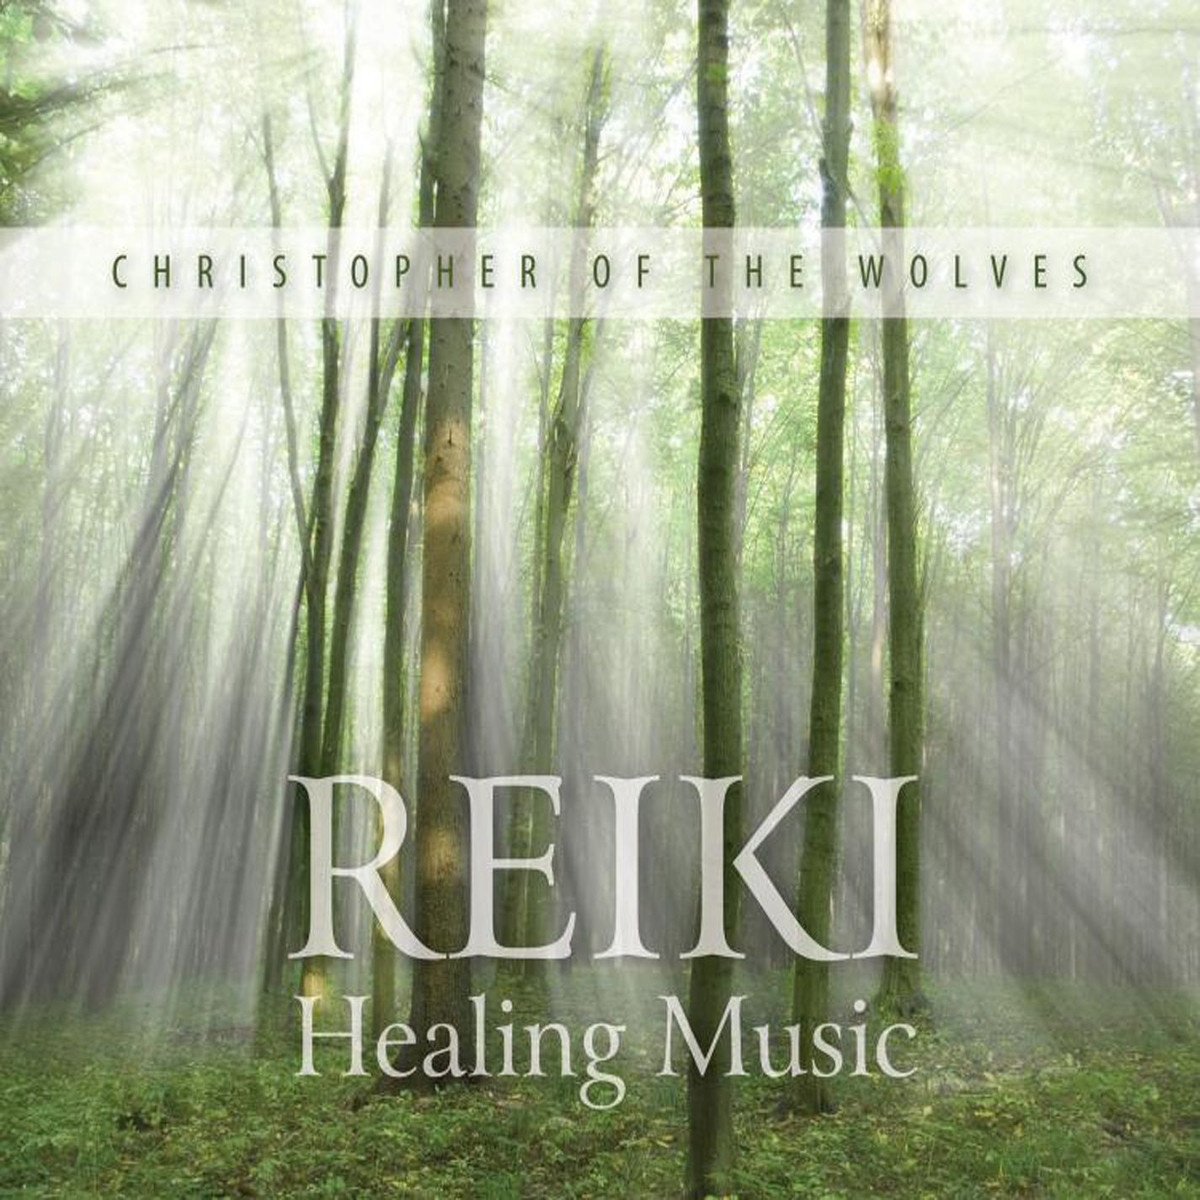 Reiki Healing Music